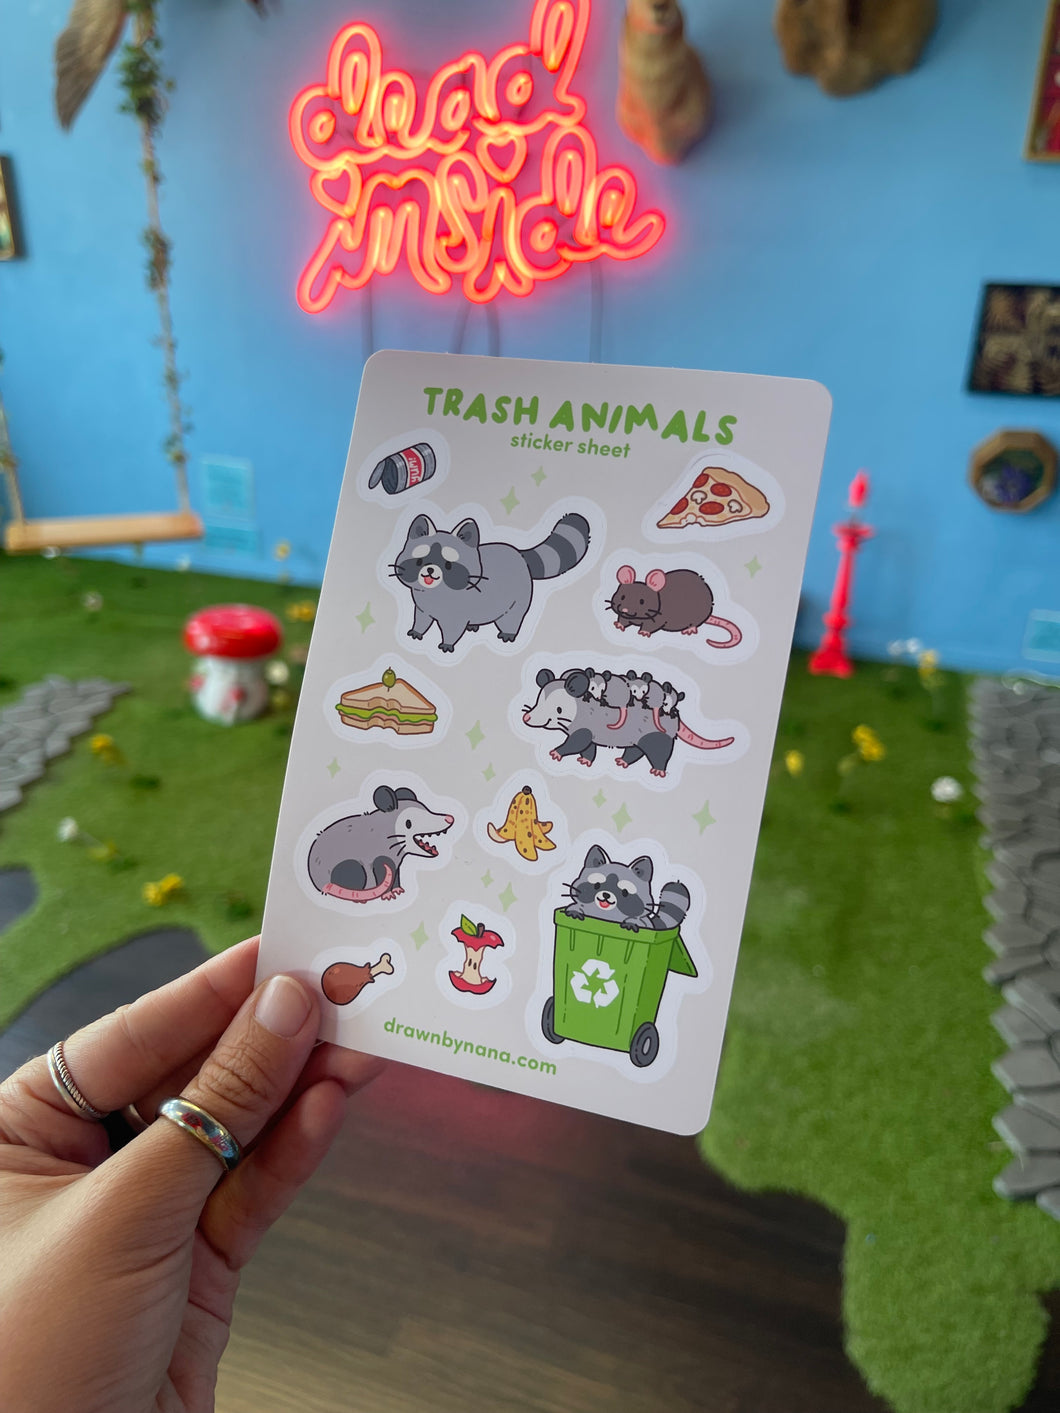 Trash Animals Sticker Sheet by Nana